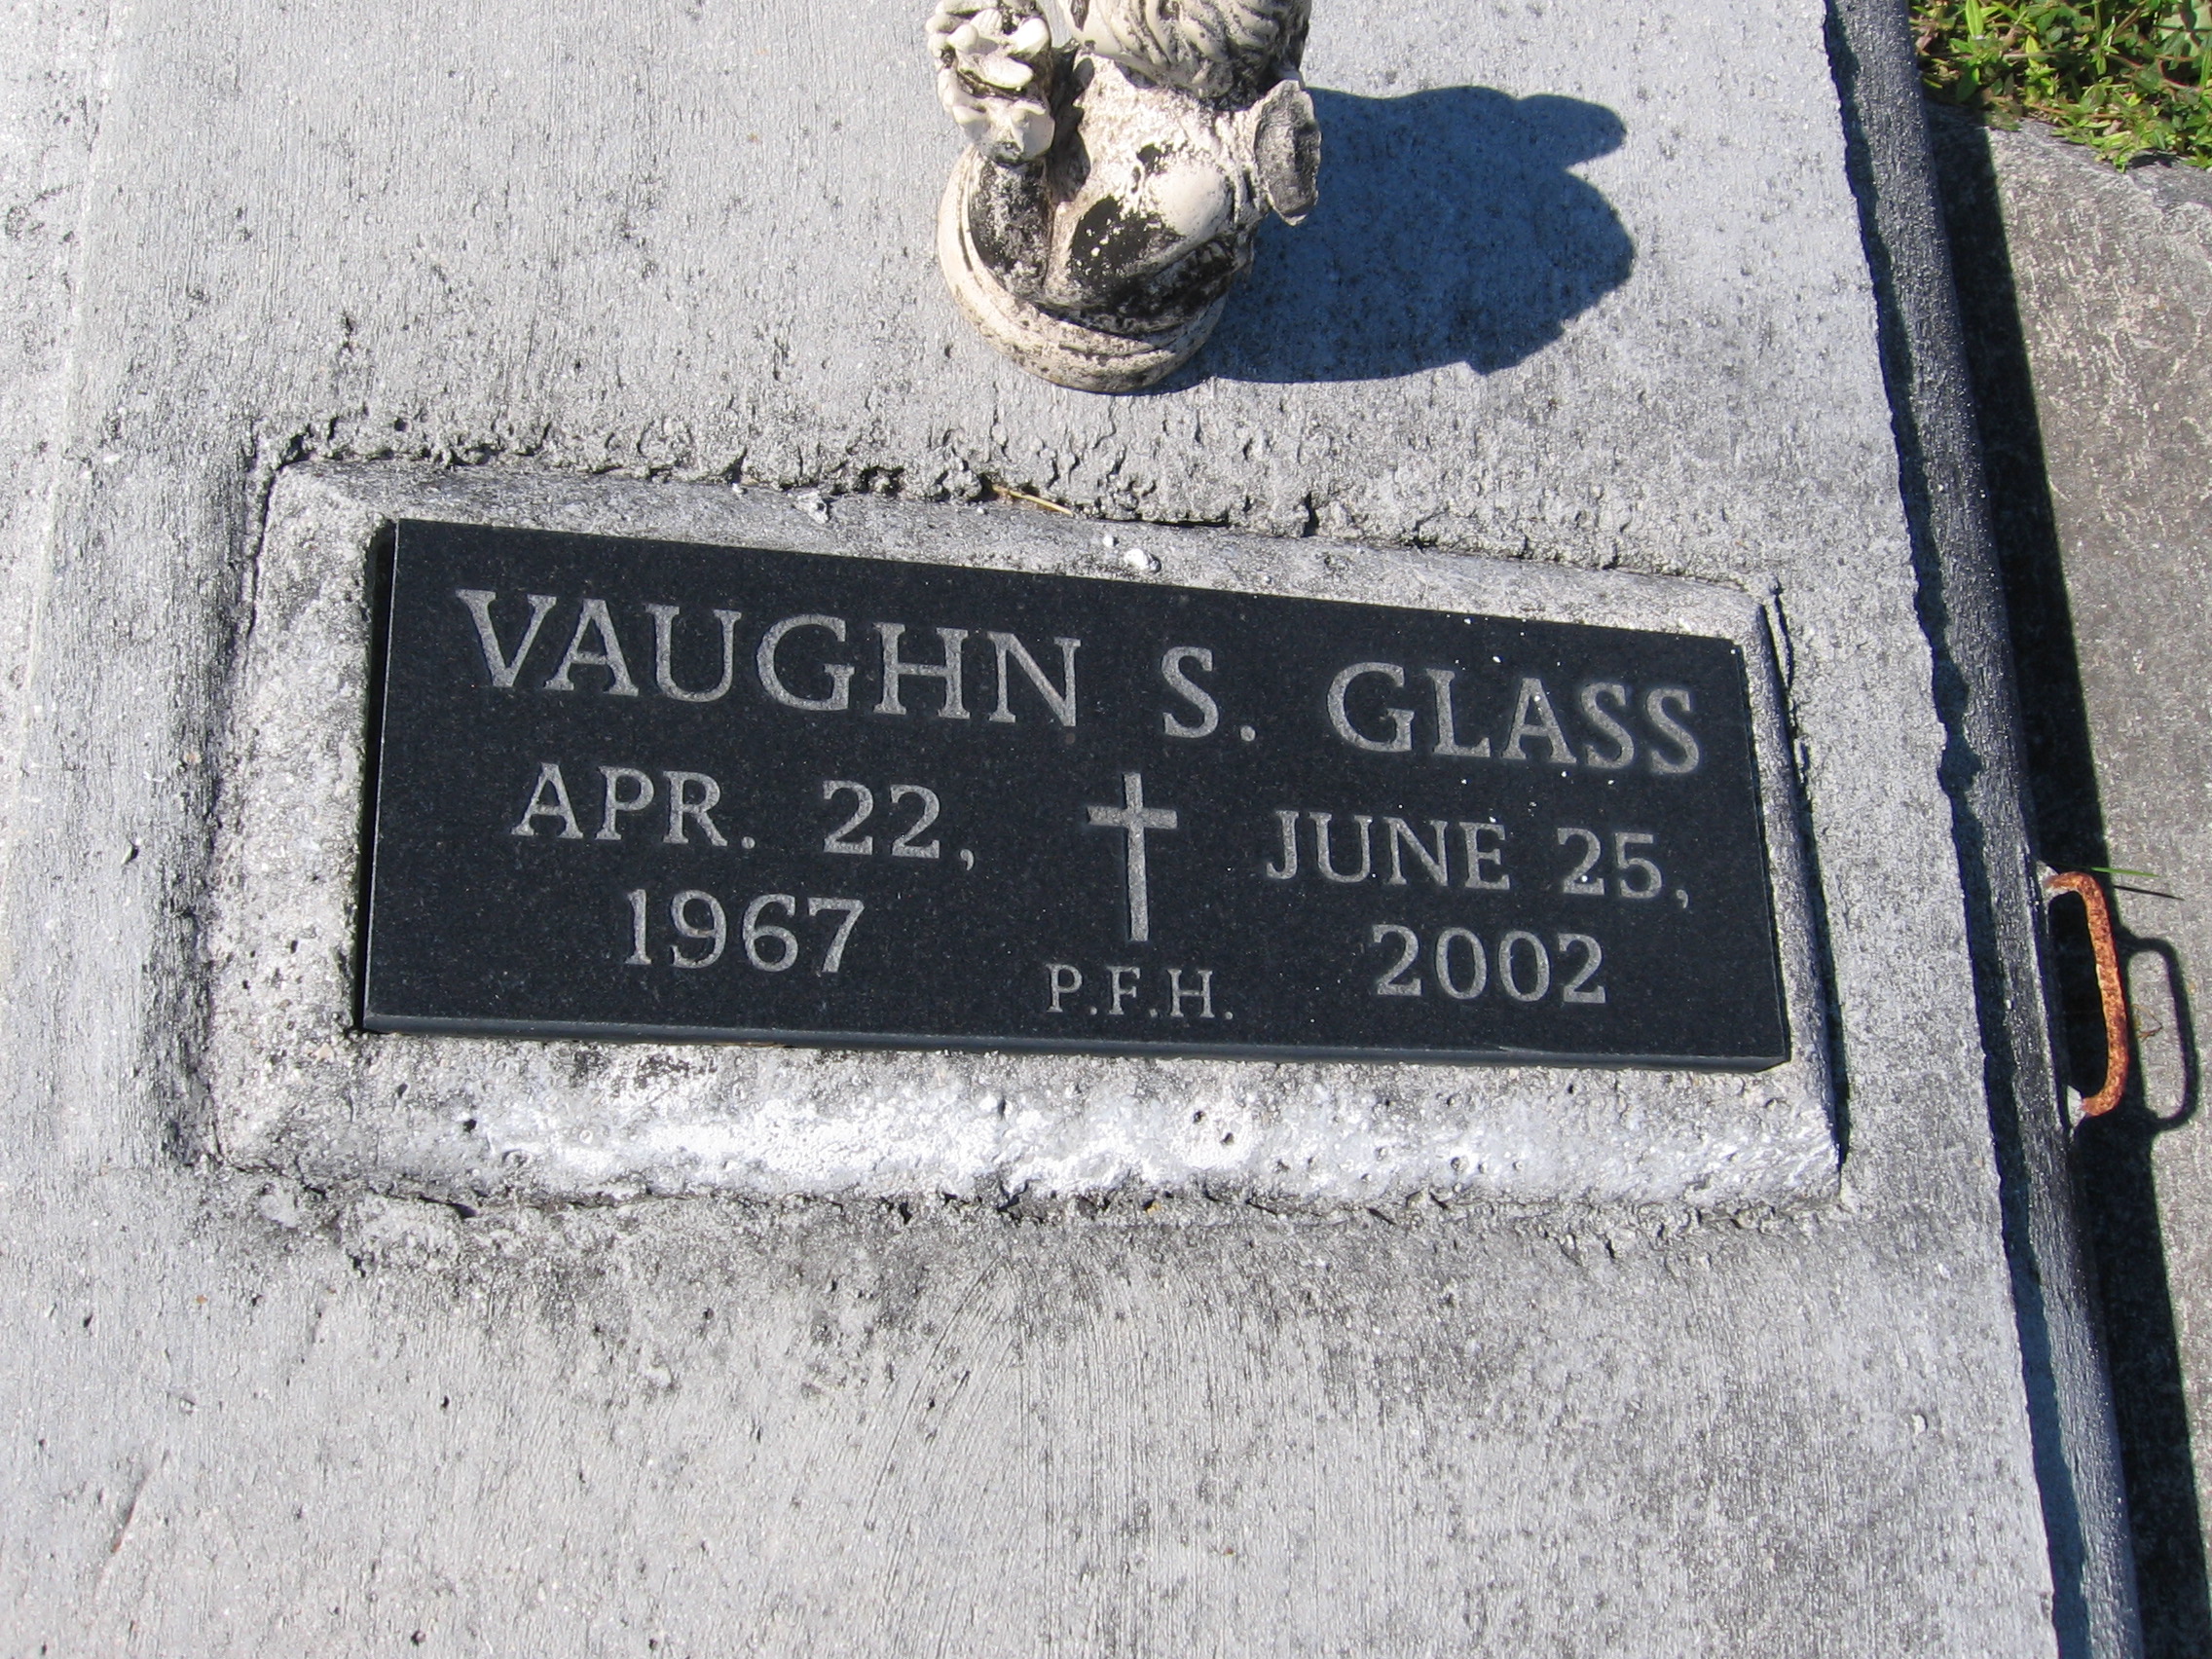 Vaughn S Glass